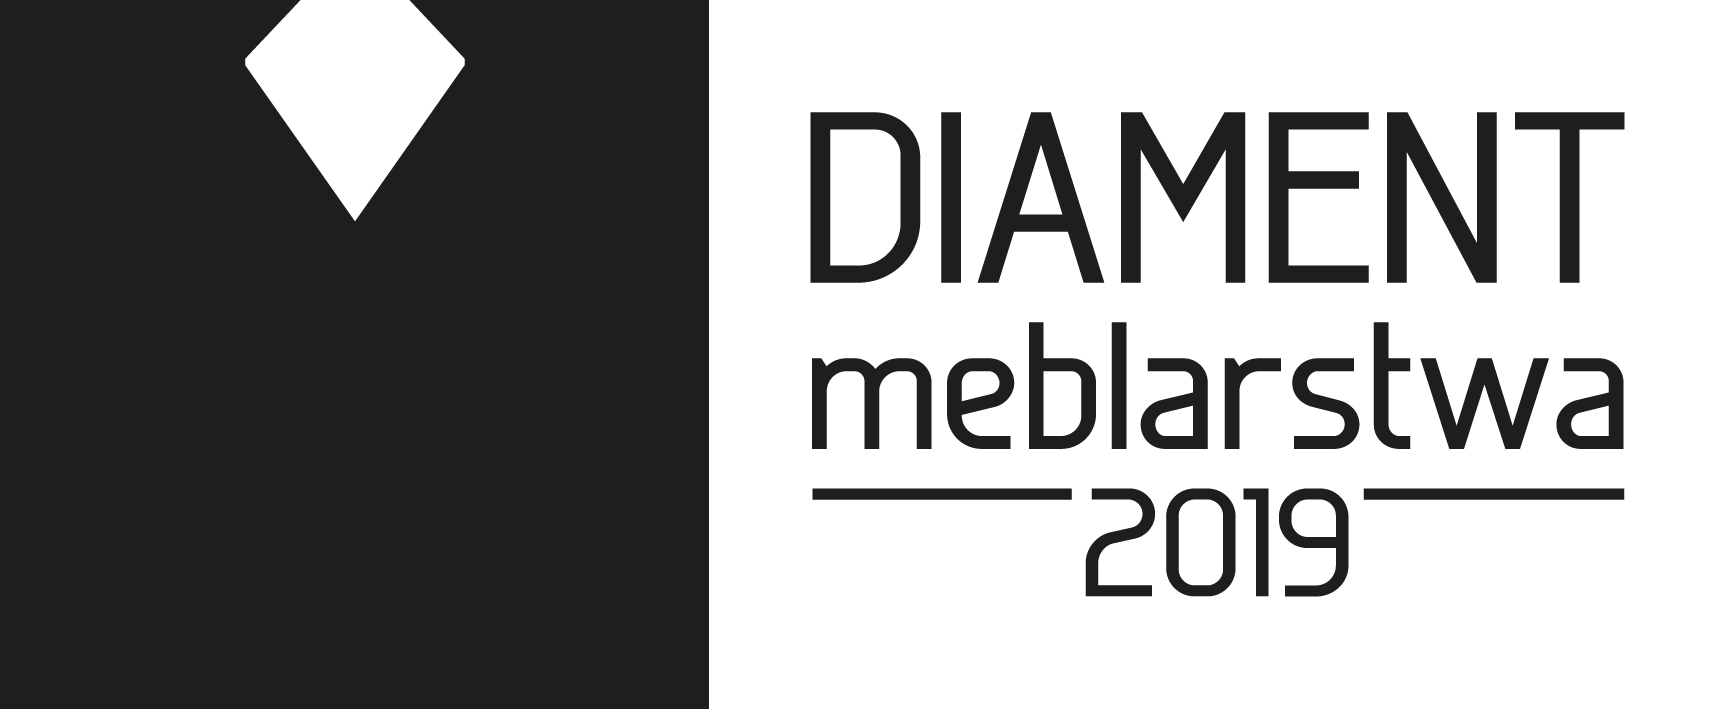 Diament meblarstwa 2019 w kategorii STREFA SNU – MEBLE